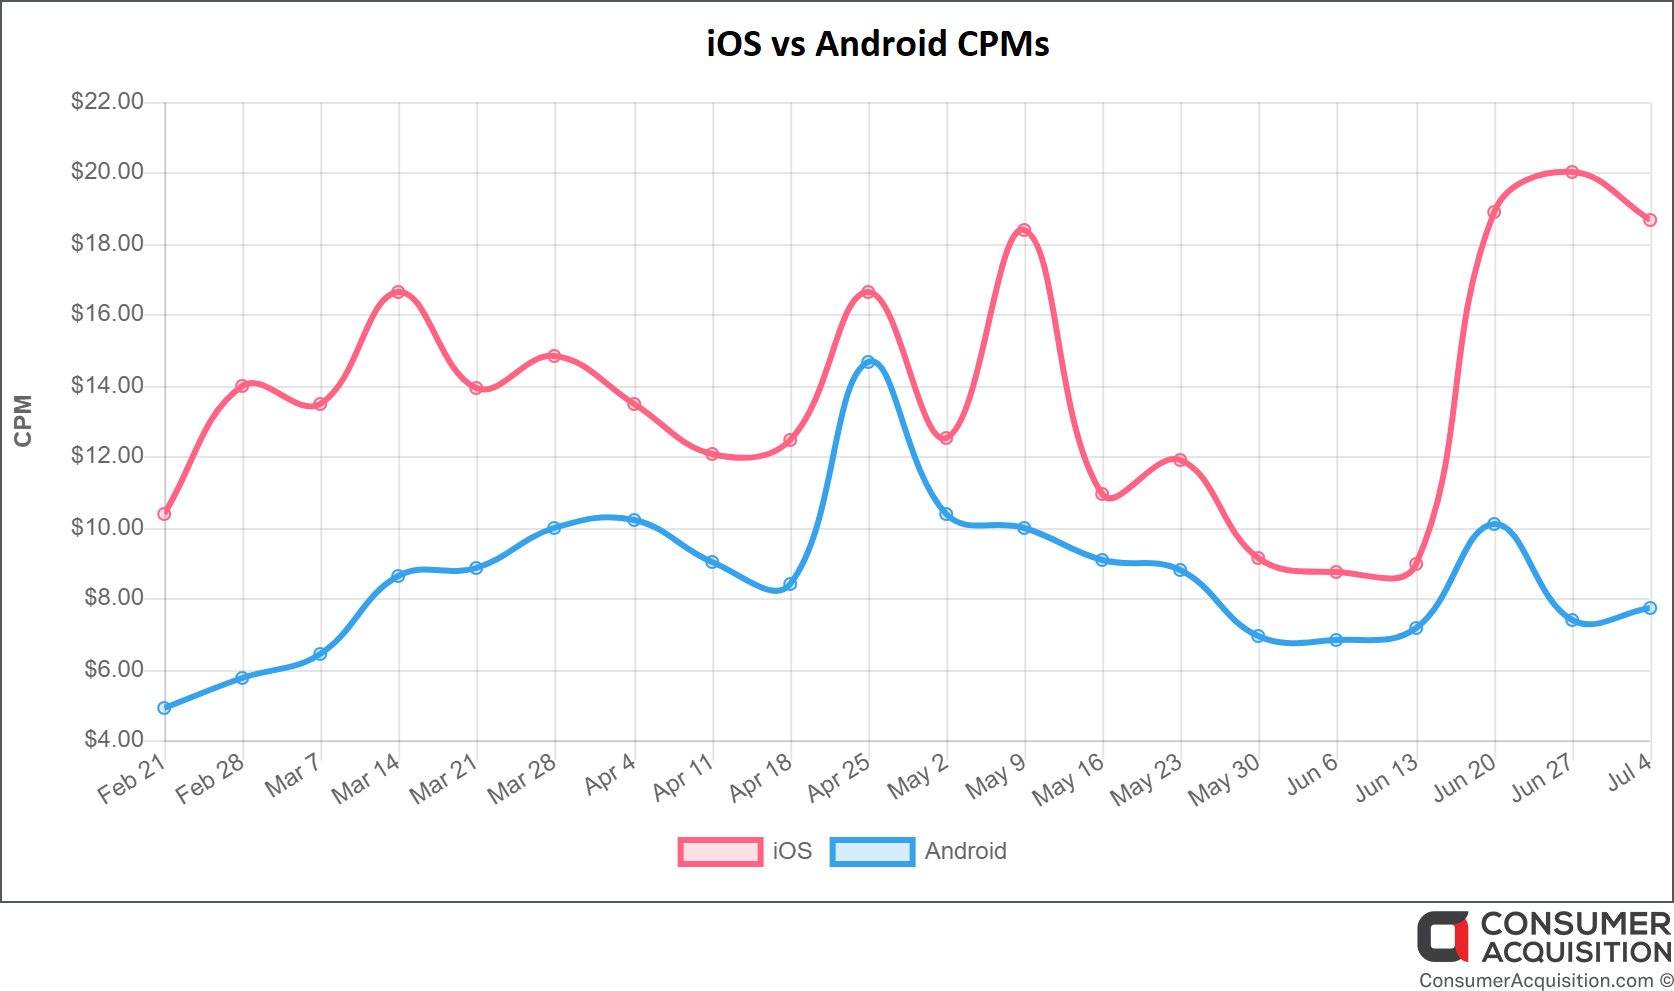 iOS v Androids CPMs post-idfa